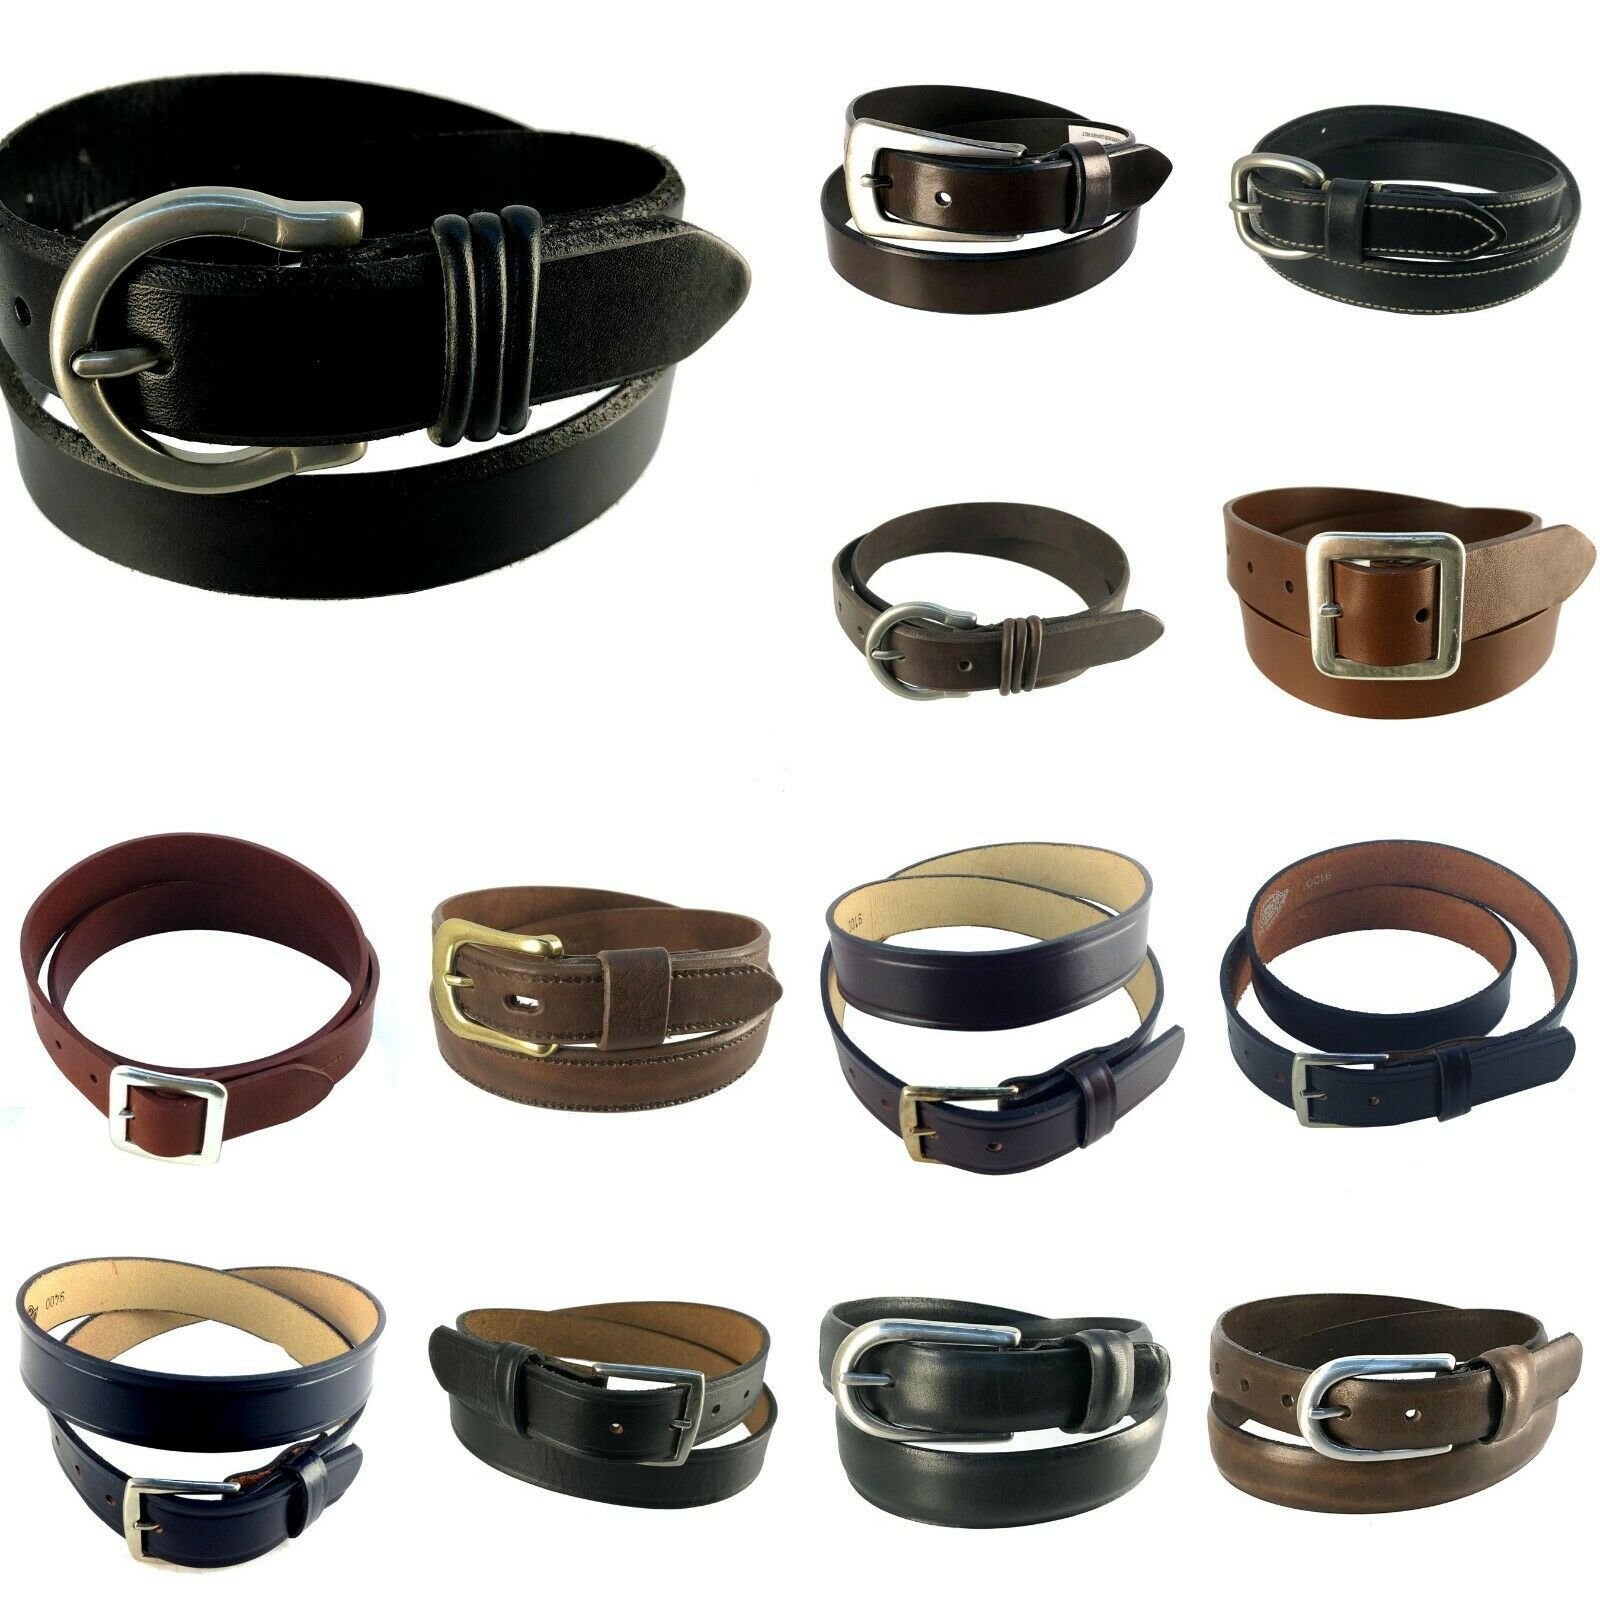 (G-1) Dickes Or Dockers,  Designer Dress-Up, Men Leather Belts Assorted - £11.76 GBP - £25.18 GBP